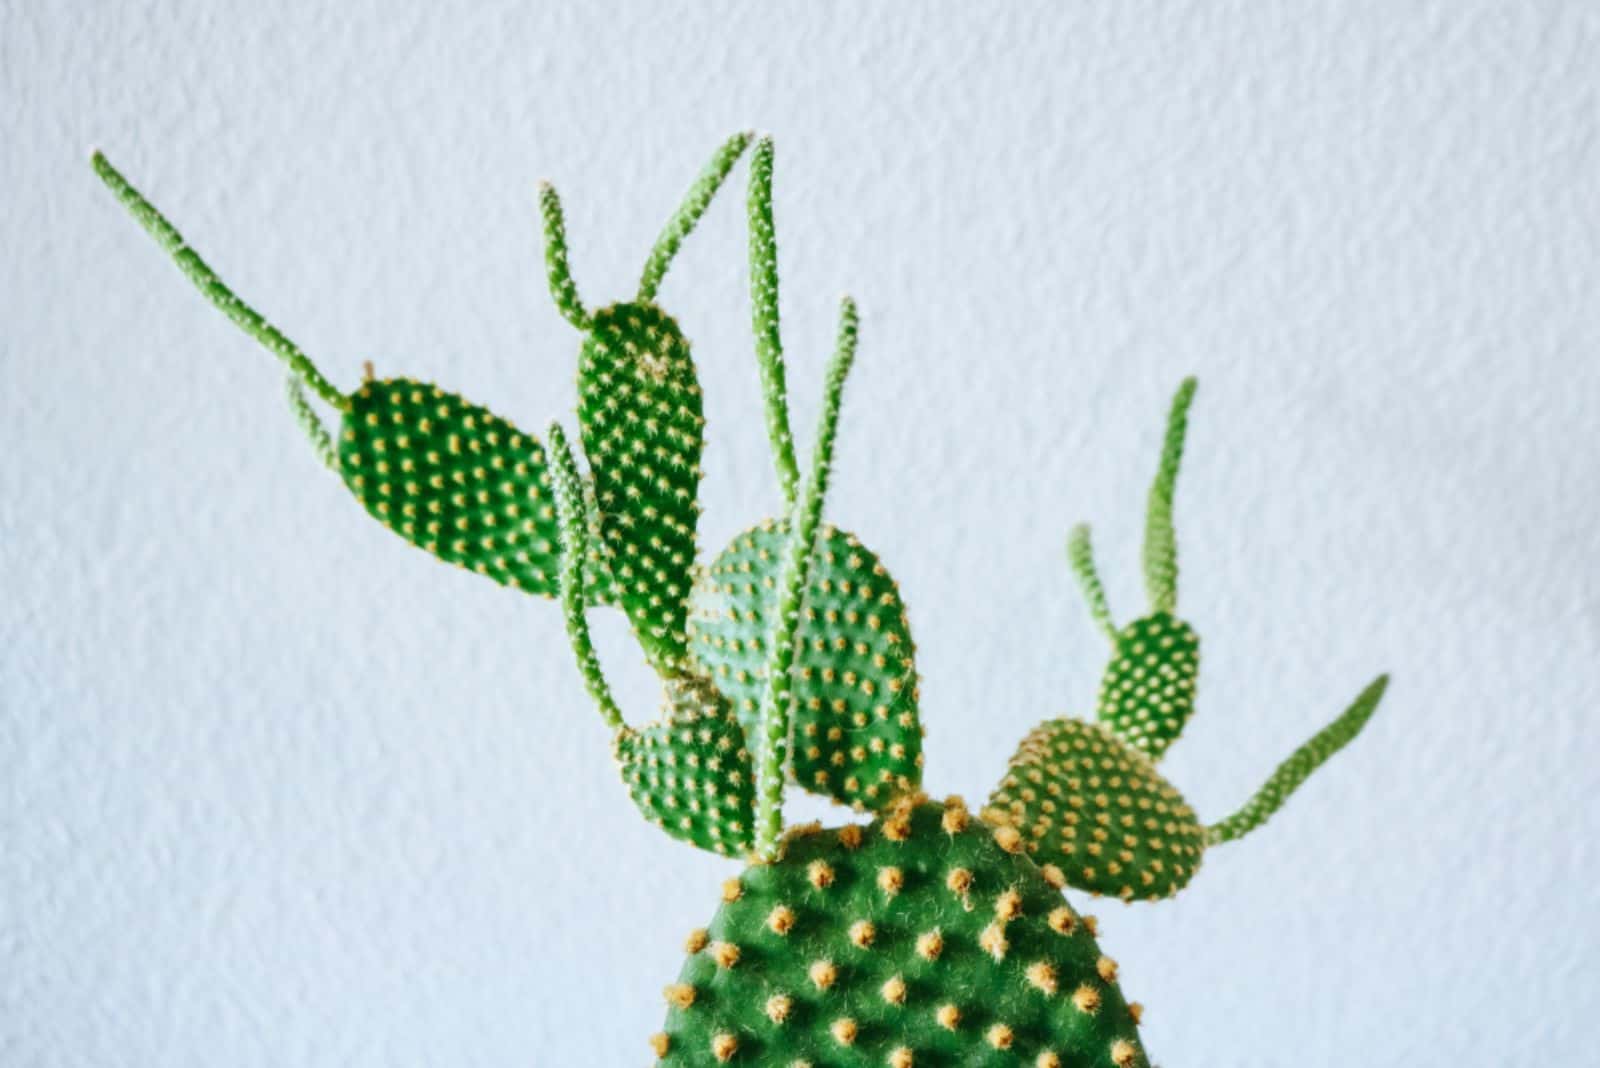 Cactus plant developing an Etiolation